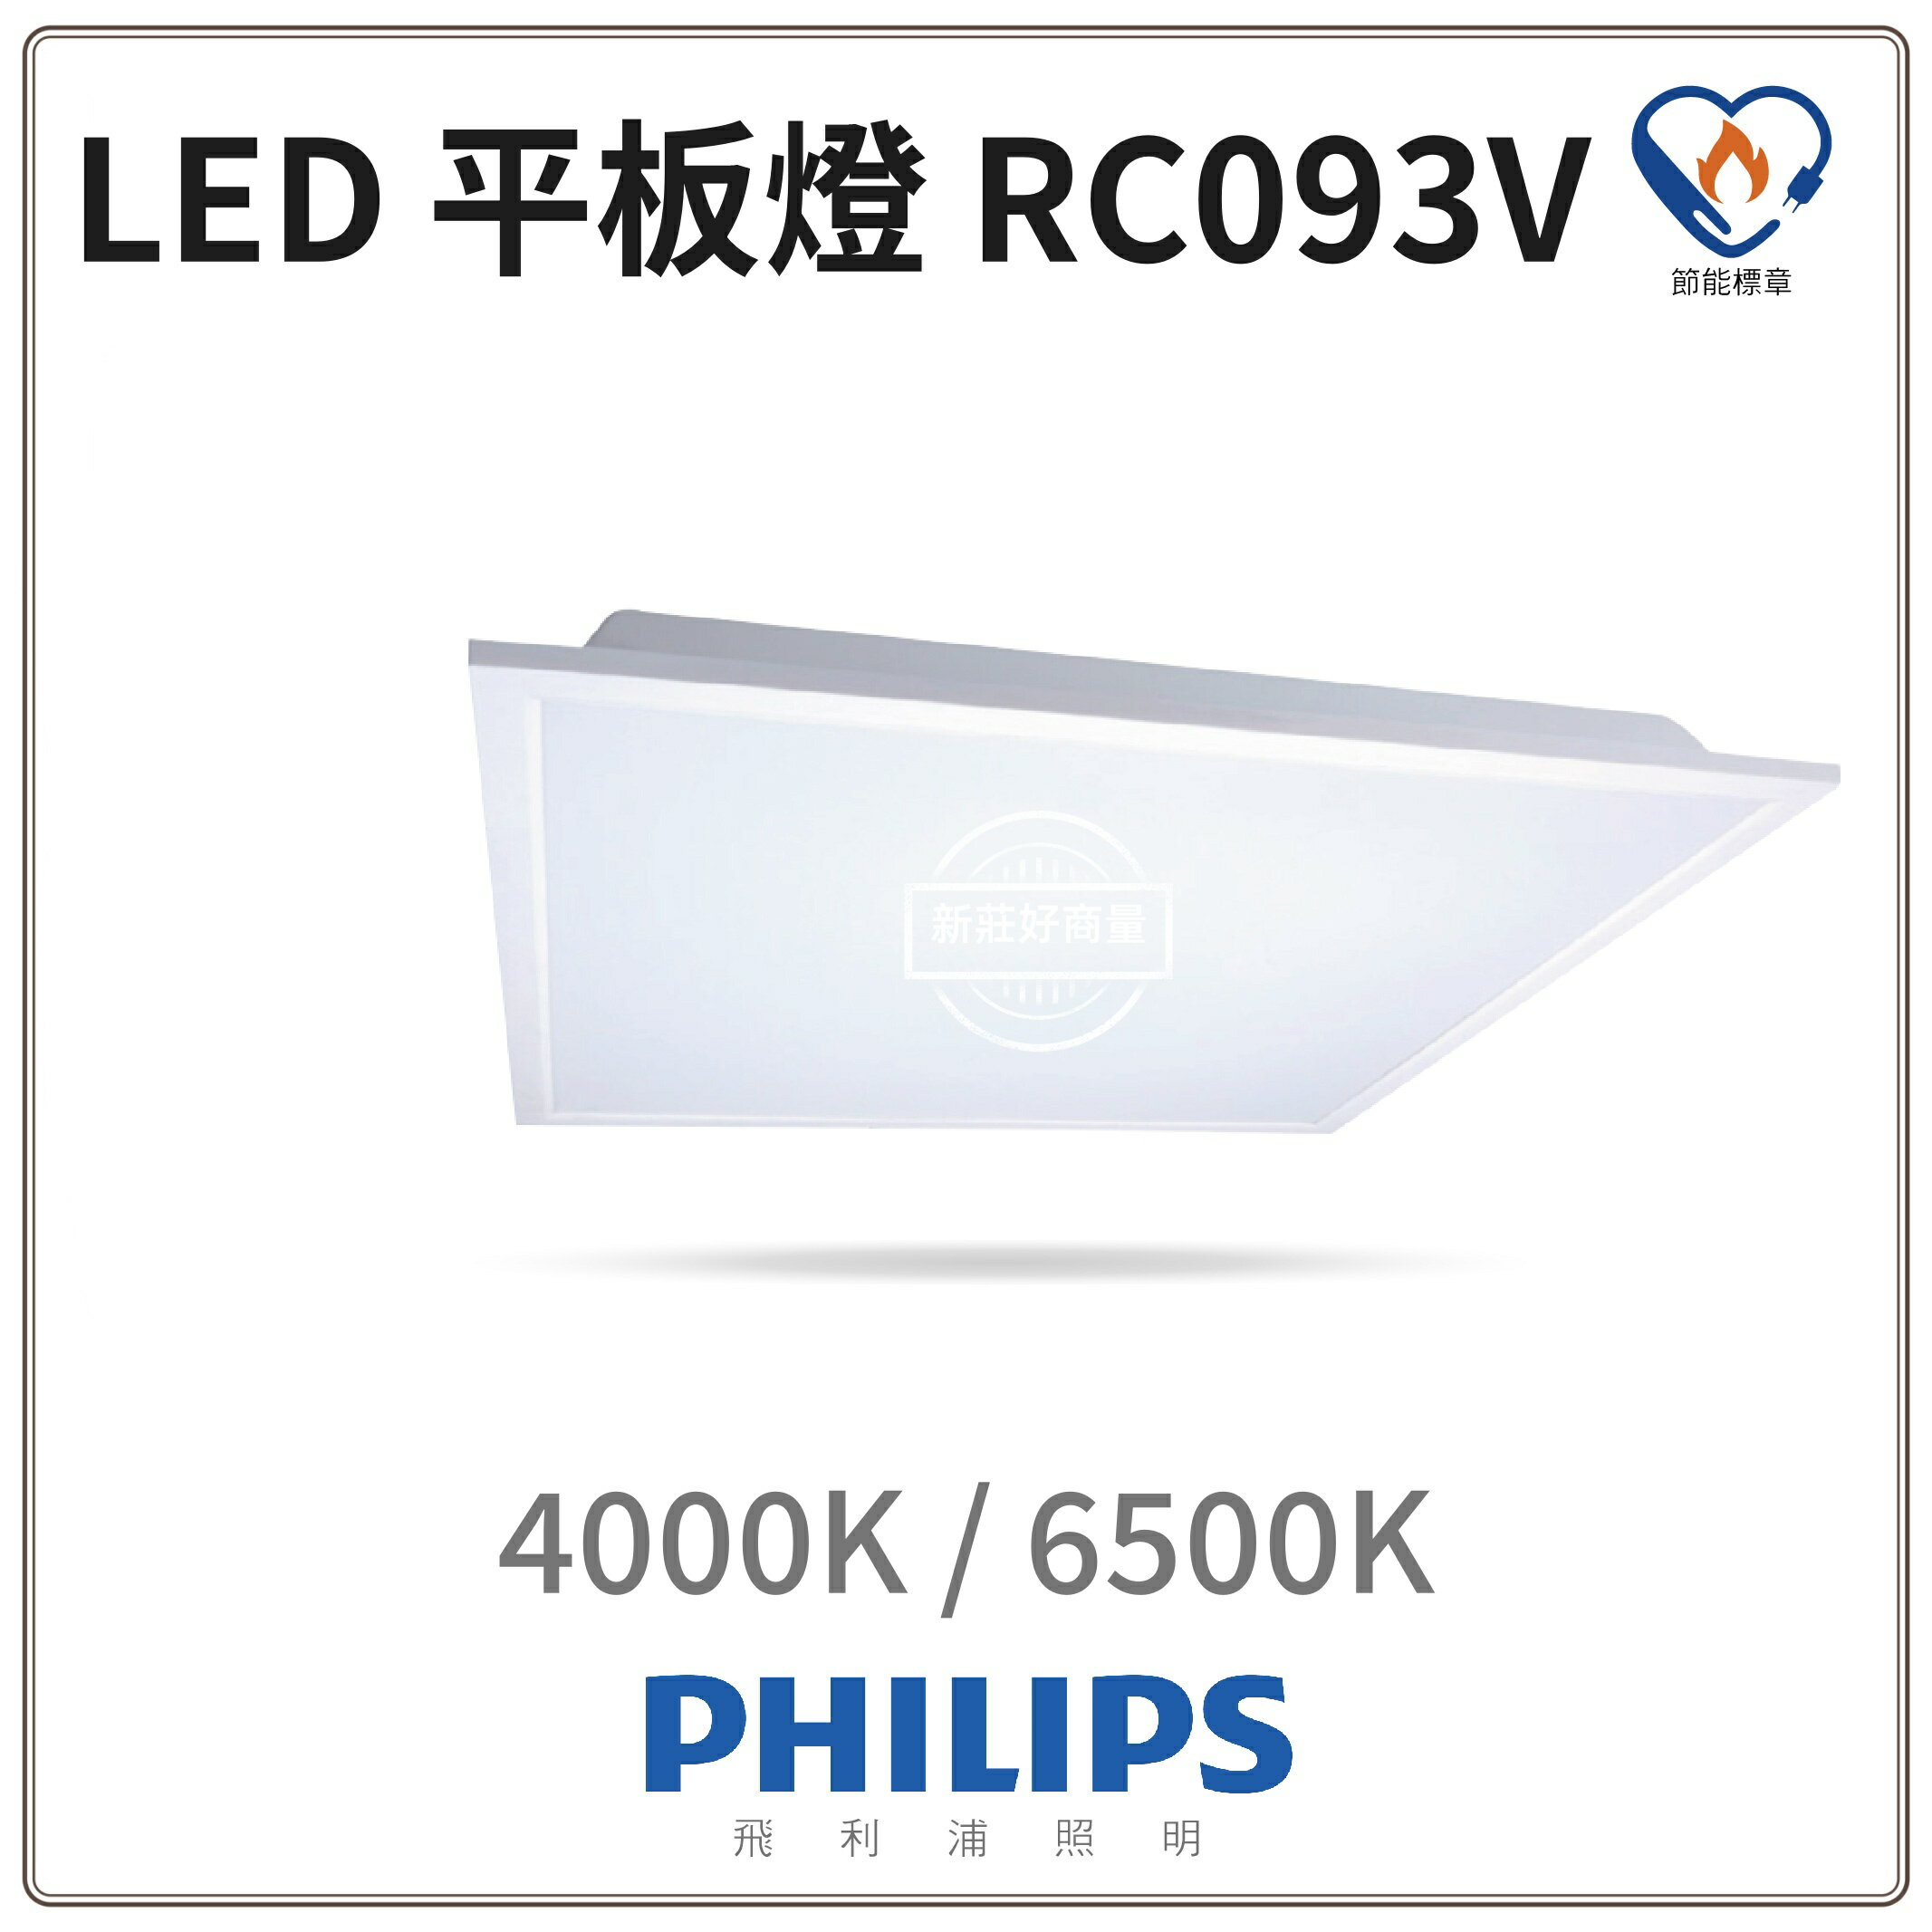 PHILIPS 飛利浦 LED 38W 輕鋼架平板燈 RC093 G2 高亮版 限時優惠中 另售RC048B 好商量~